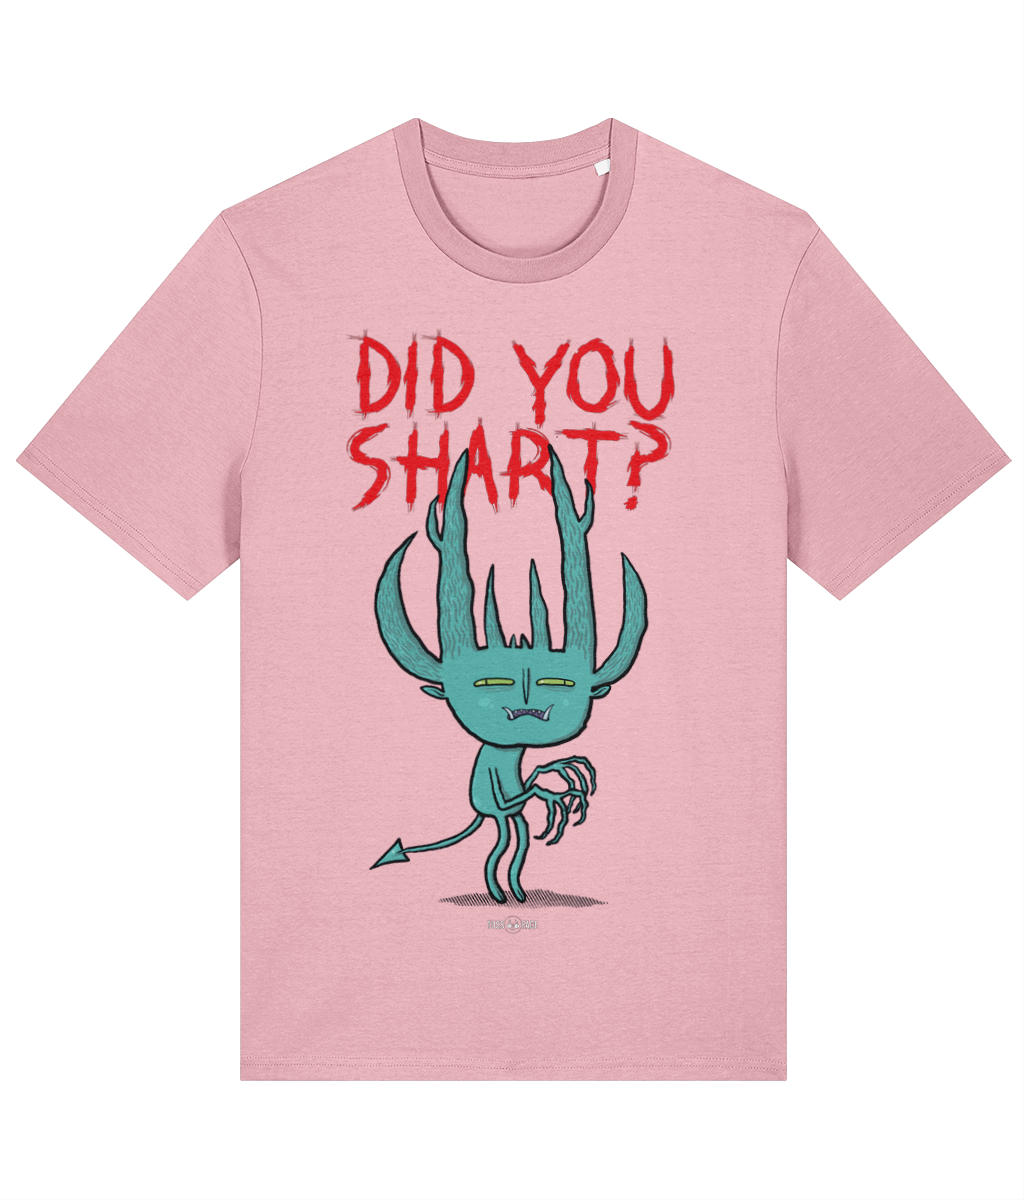 Did You Shart? - Tussface T-shirt